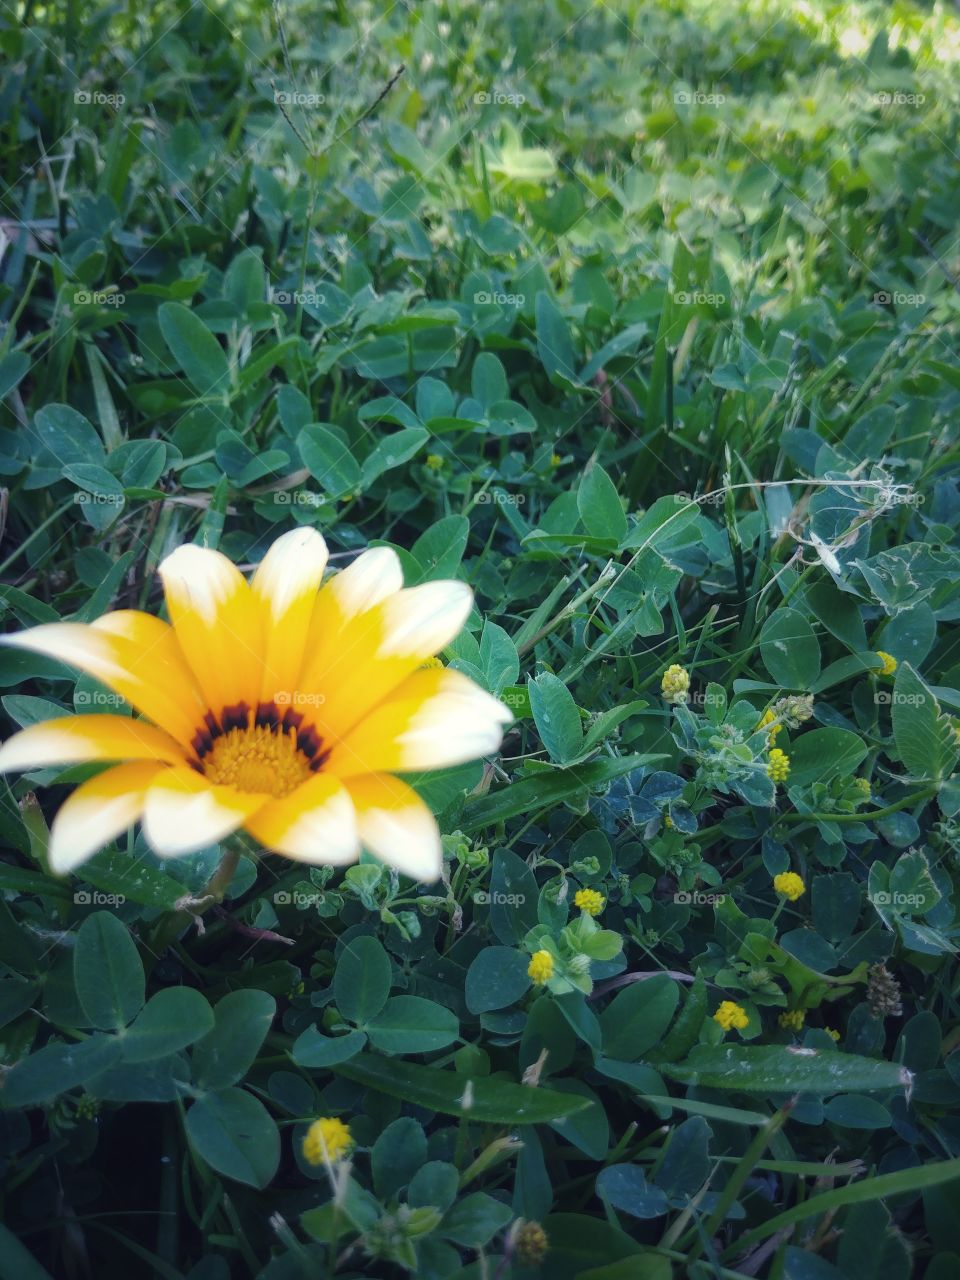 Just a flower...